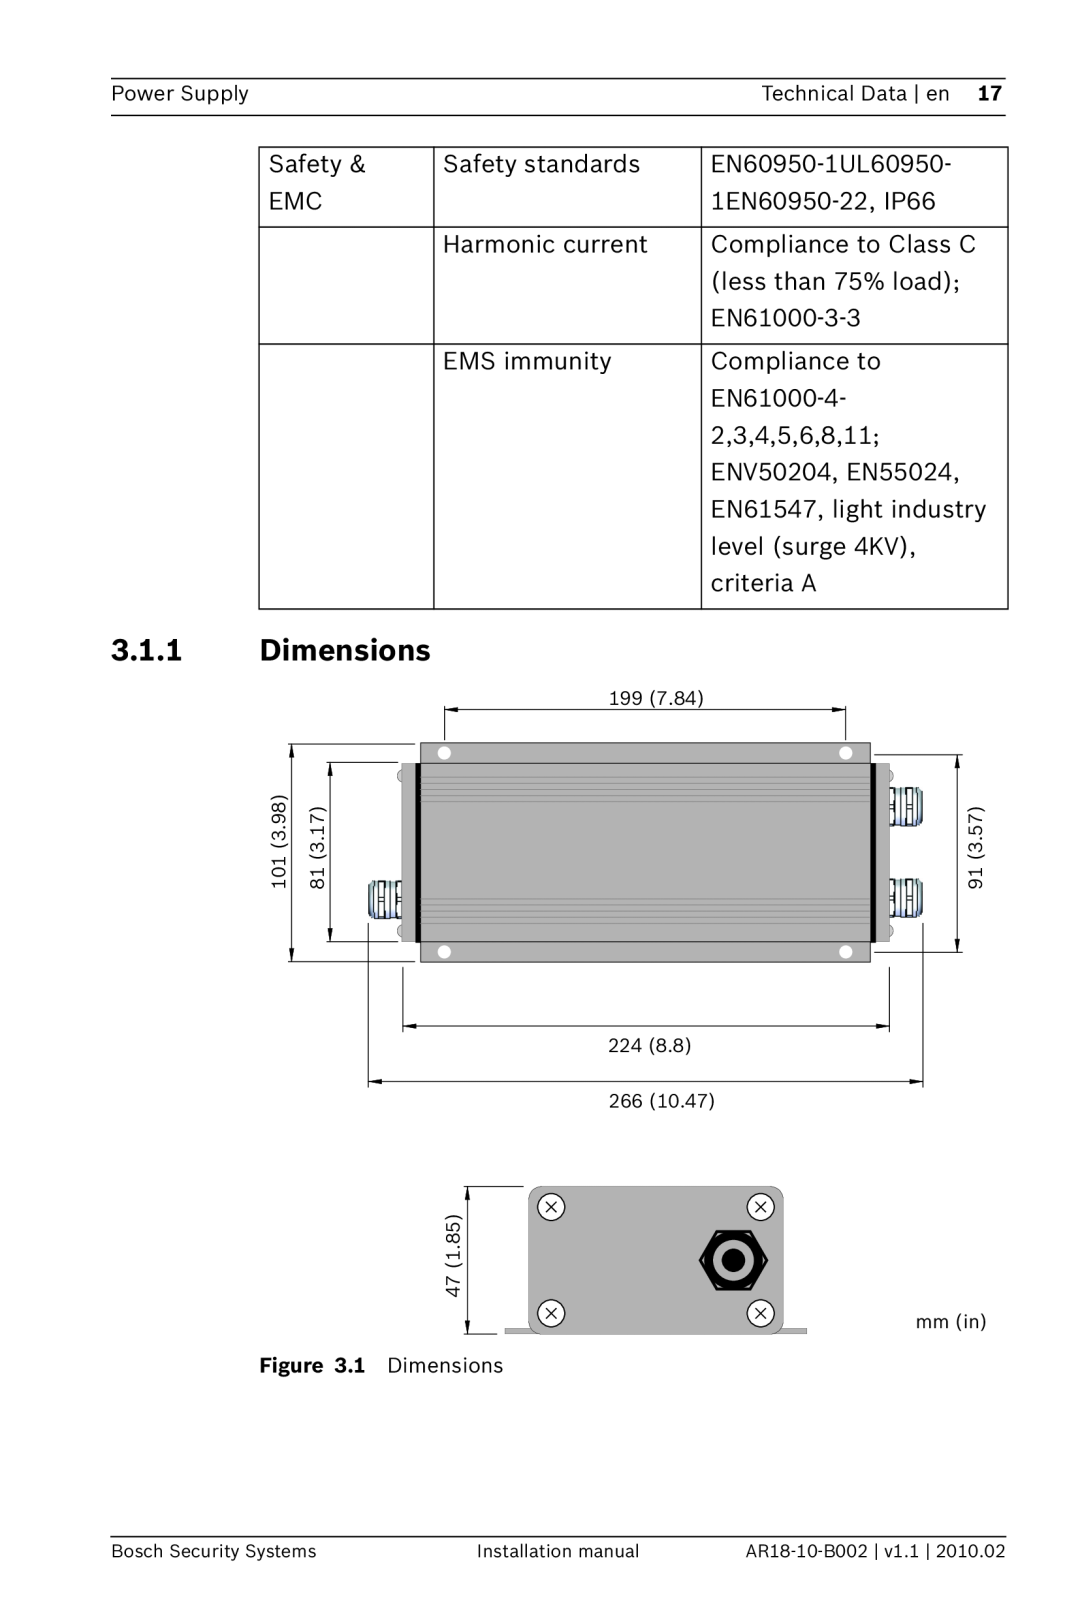 Bosch Appliances PSU-224-DC100 installation manual Dimensions 